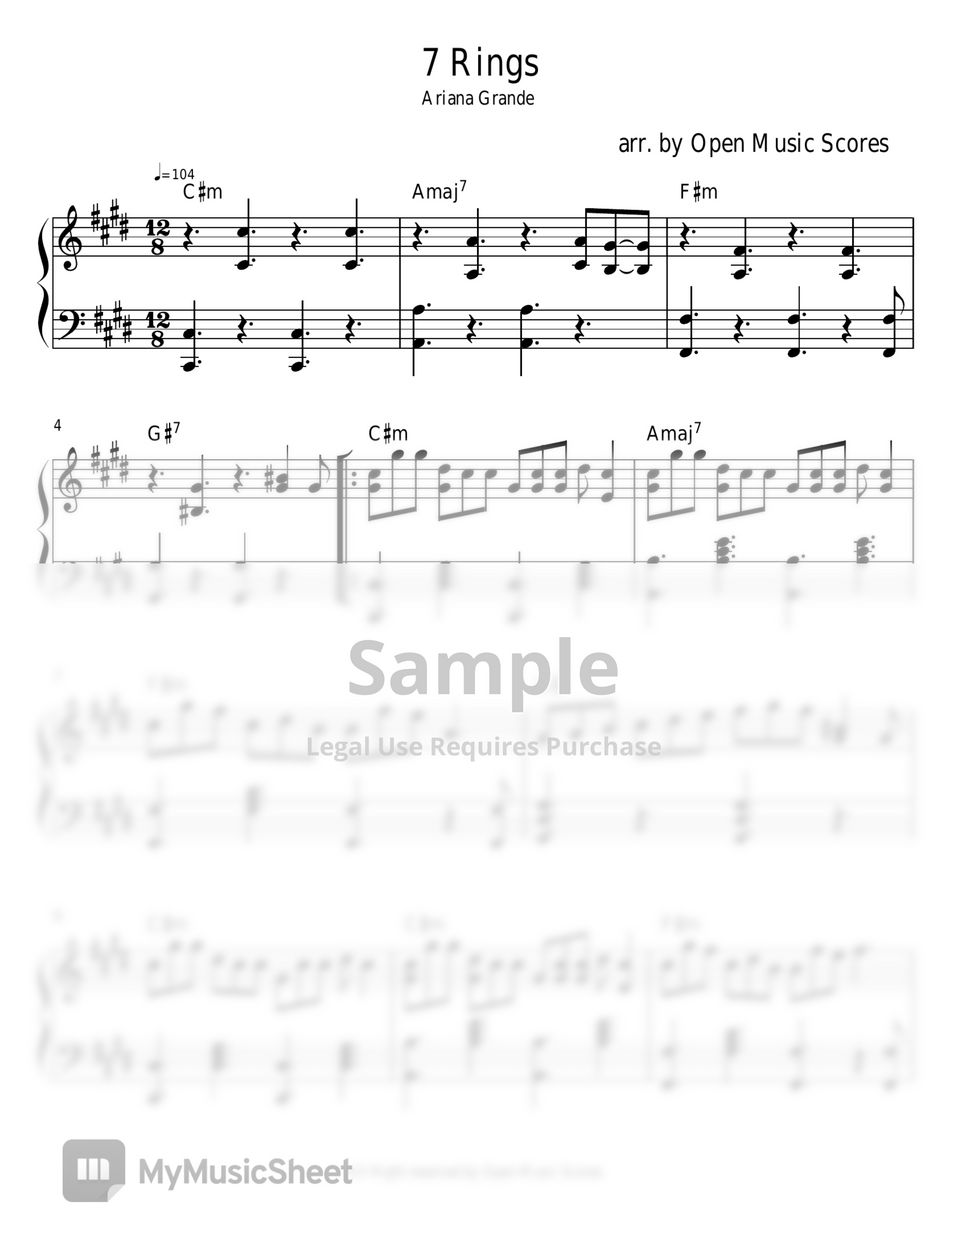 Ariana Grande - 7 Rings( Original Key) by Open Music Scores